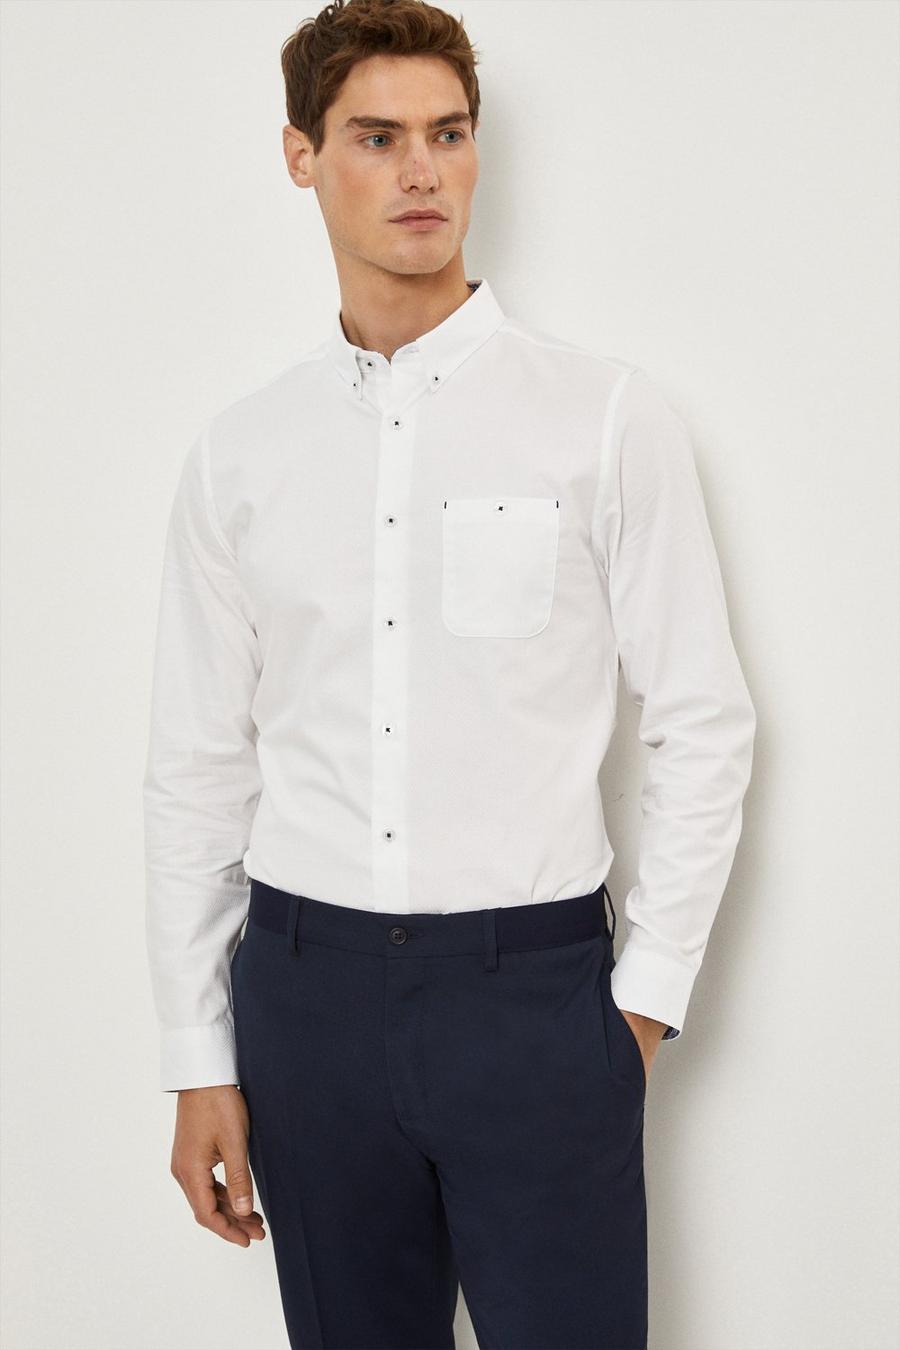 Long Sleeve Textured White Shirt